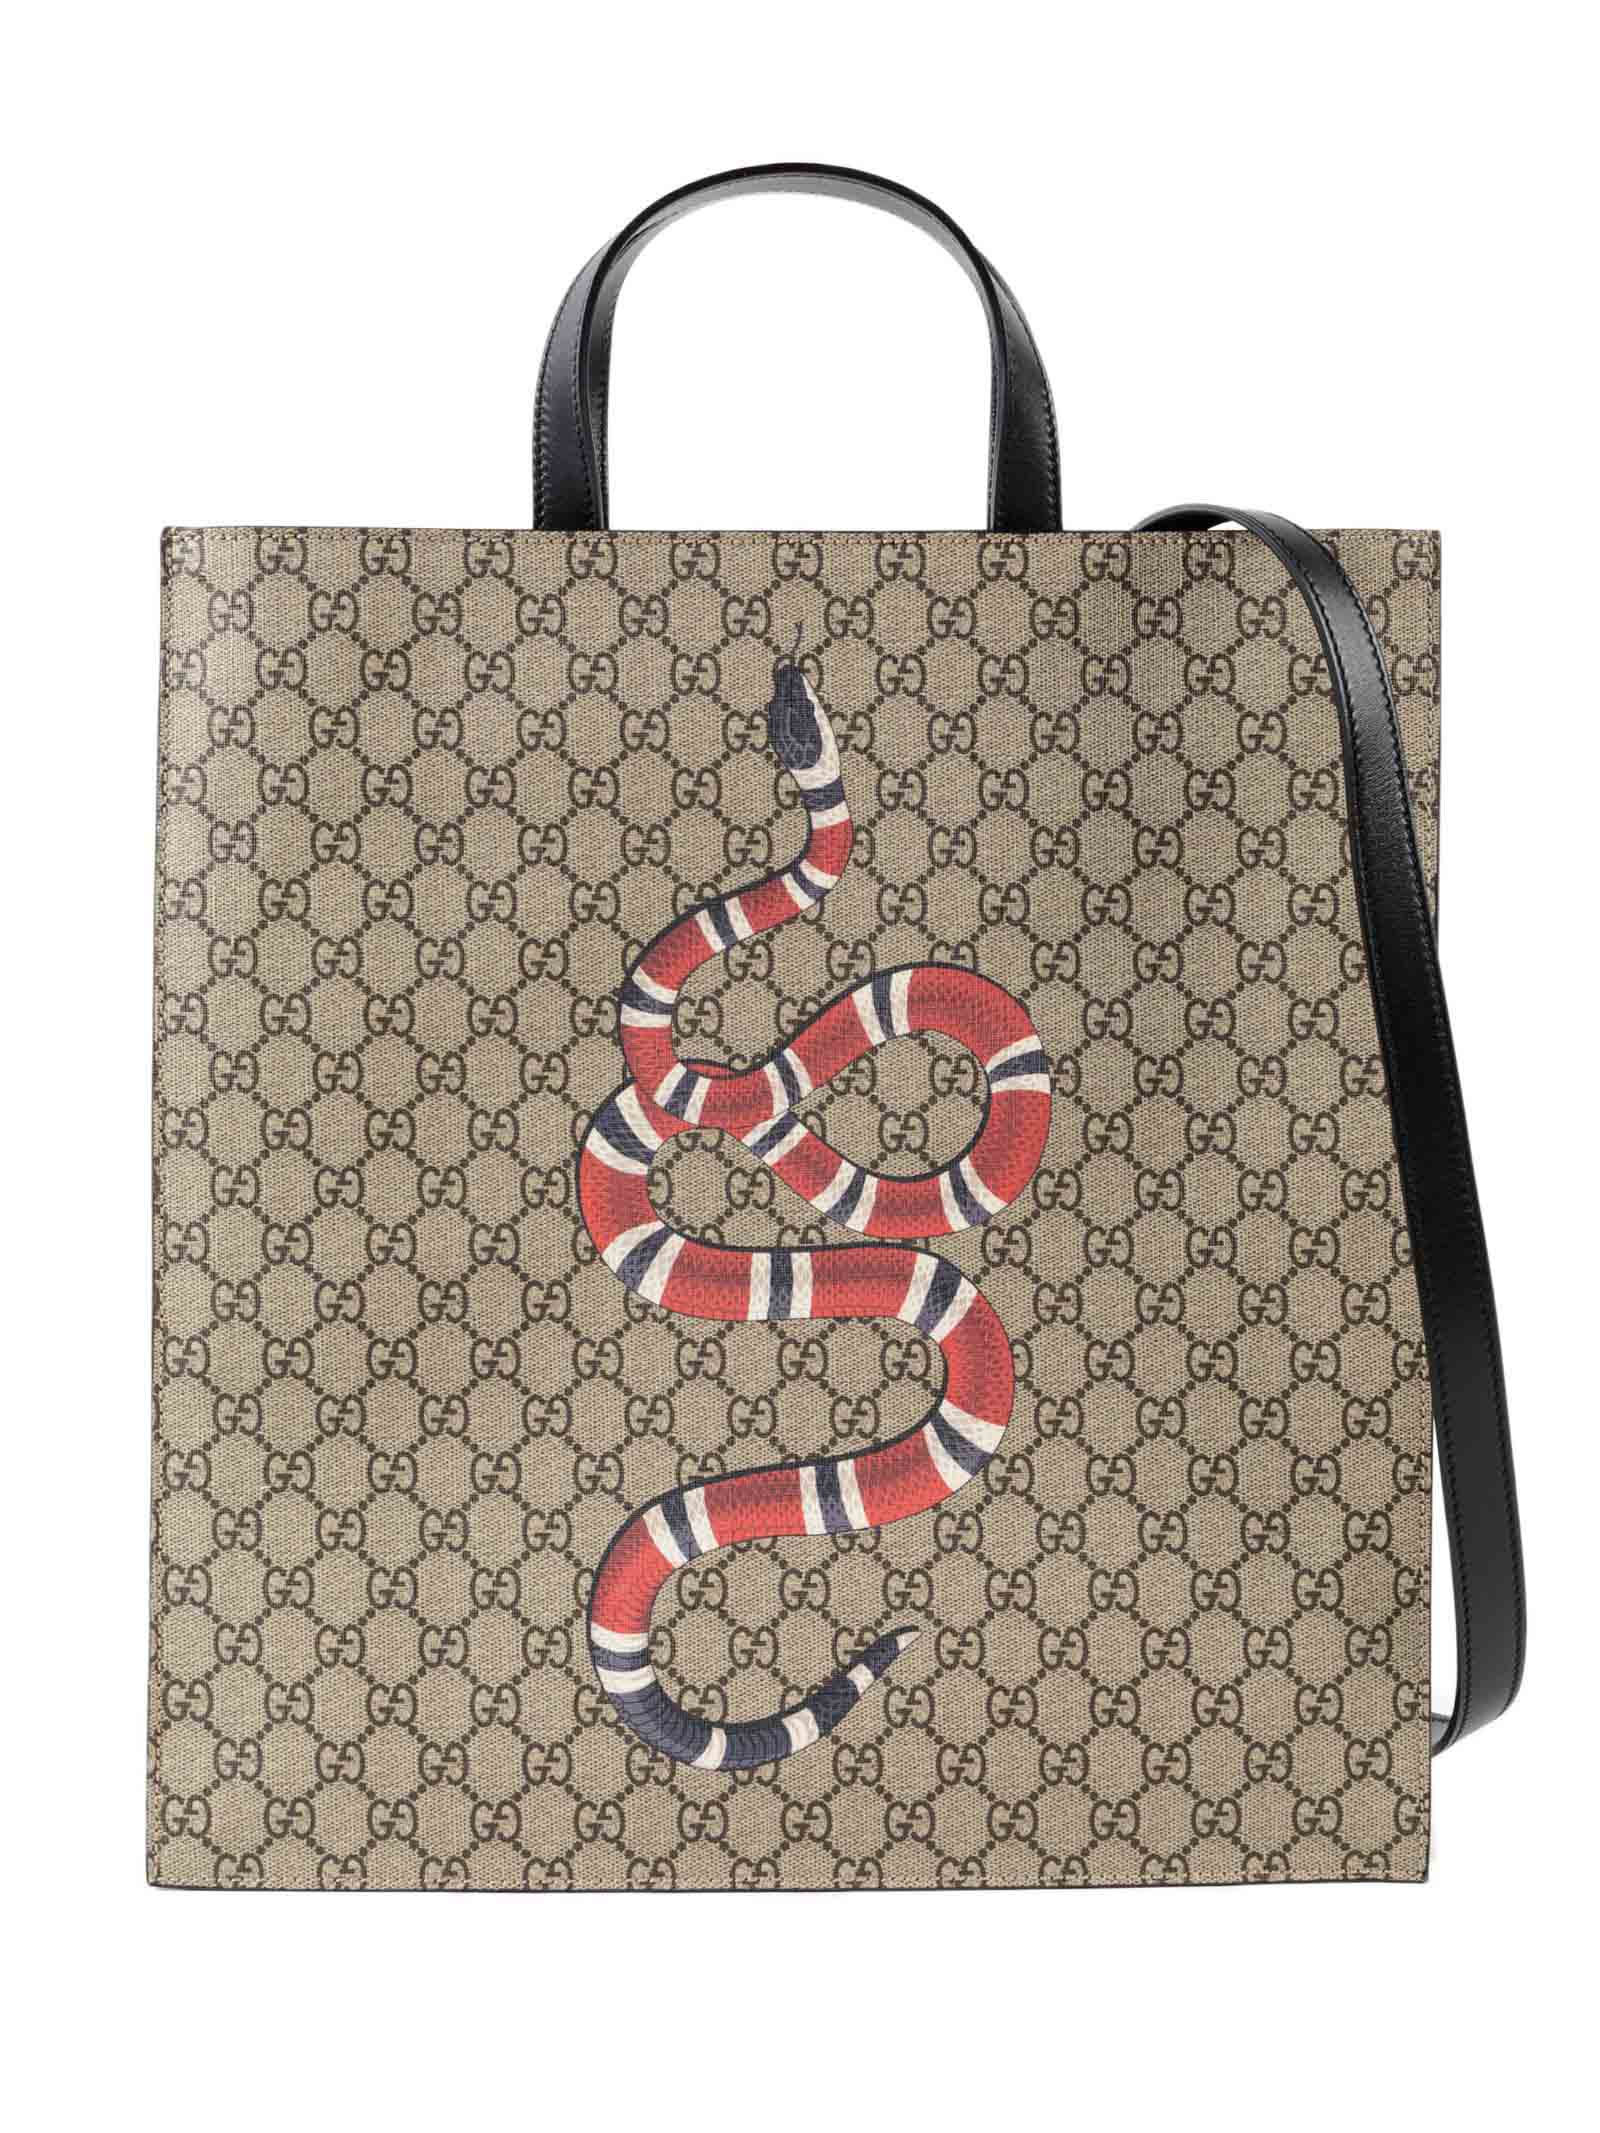 Coral Snake Gucci Logo - Gucci Tote Gg Supr. Coral Snake 450950 K5M1T BE.EBONY MULTI